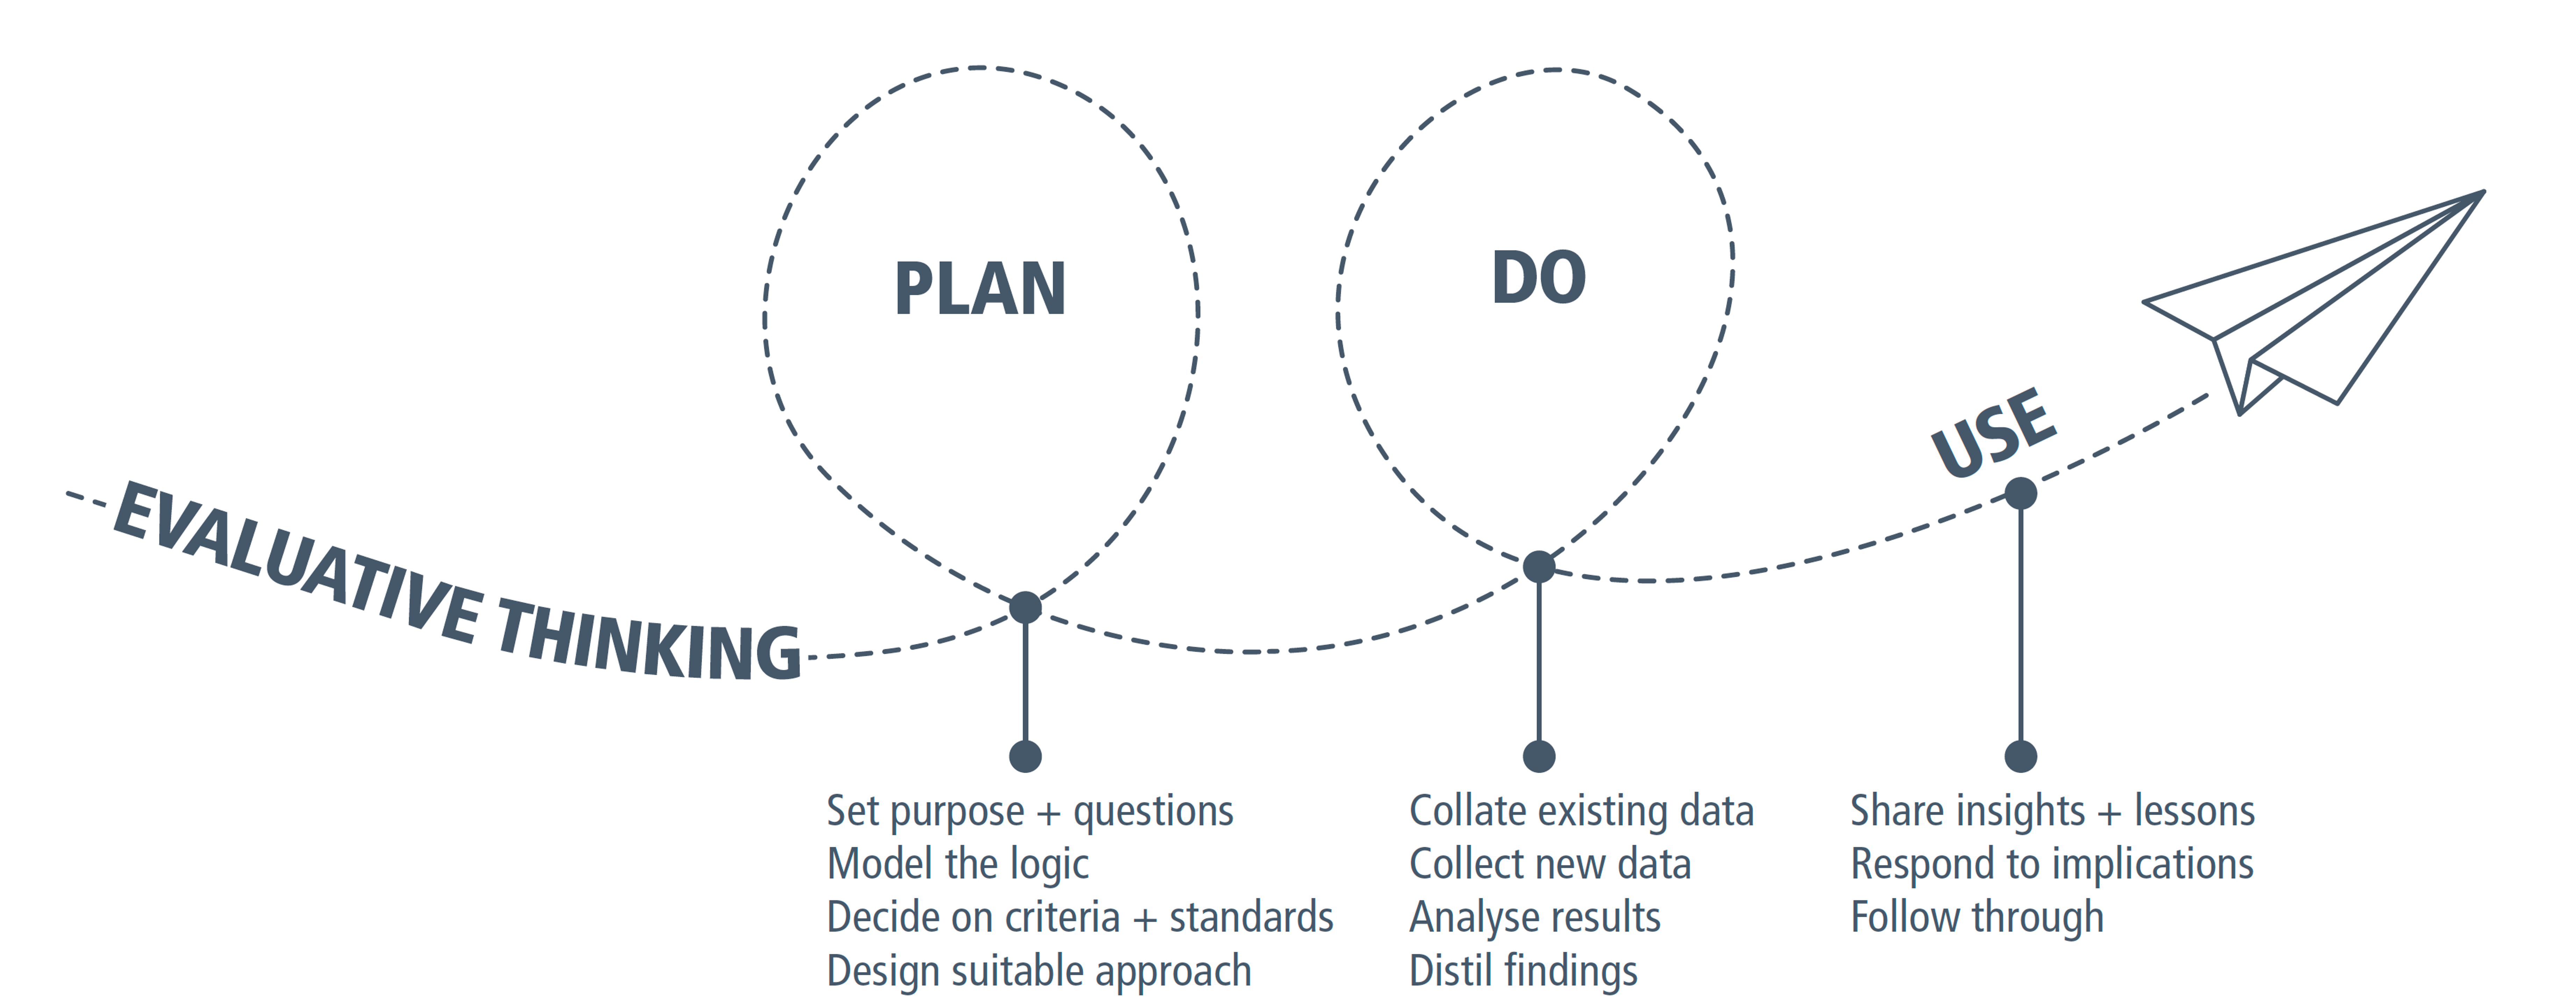 Diagram explaining the evaluative thinking process: plan, do use